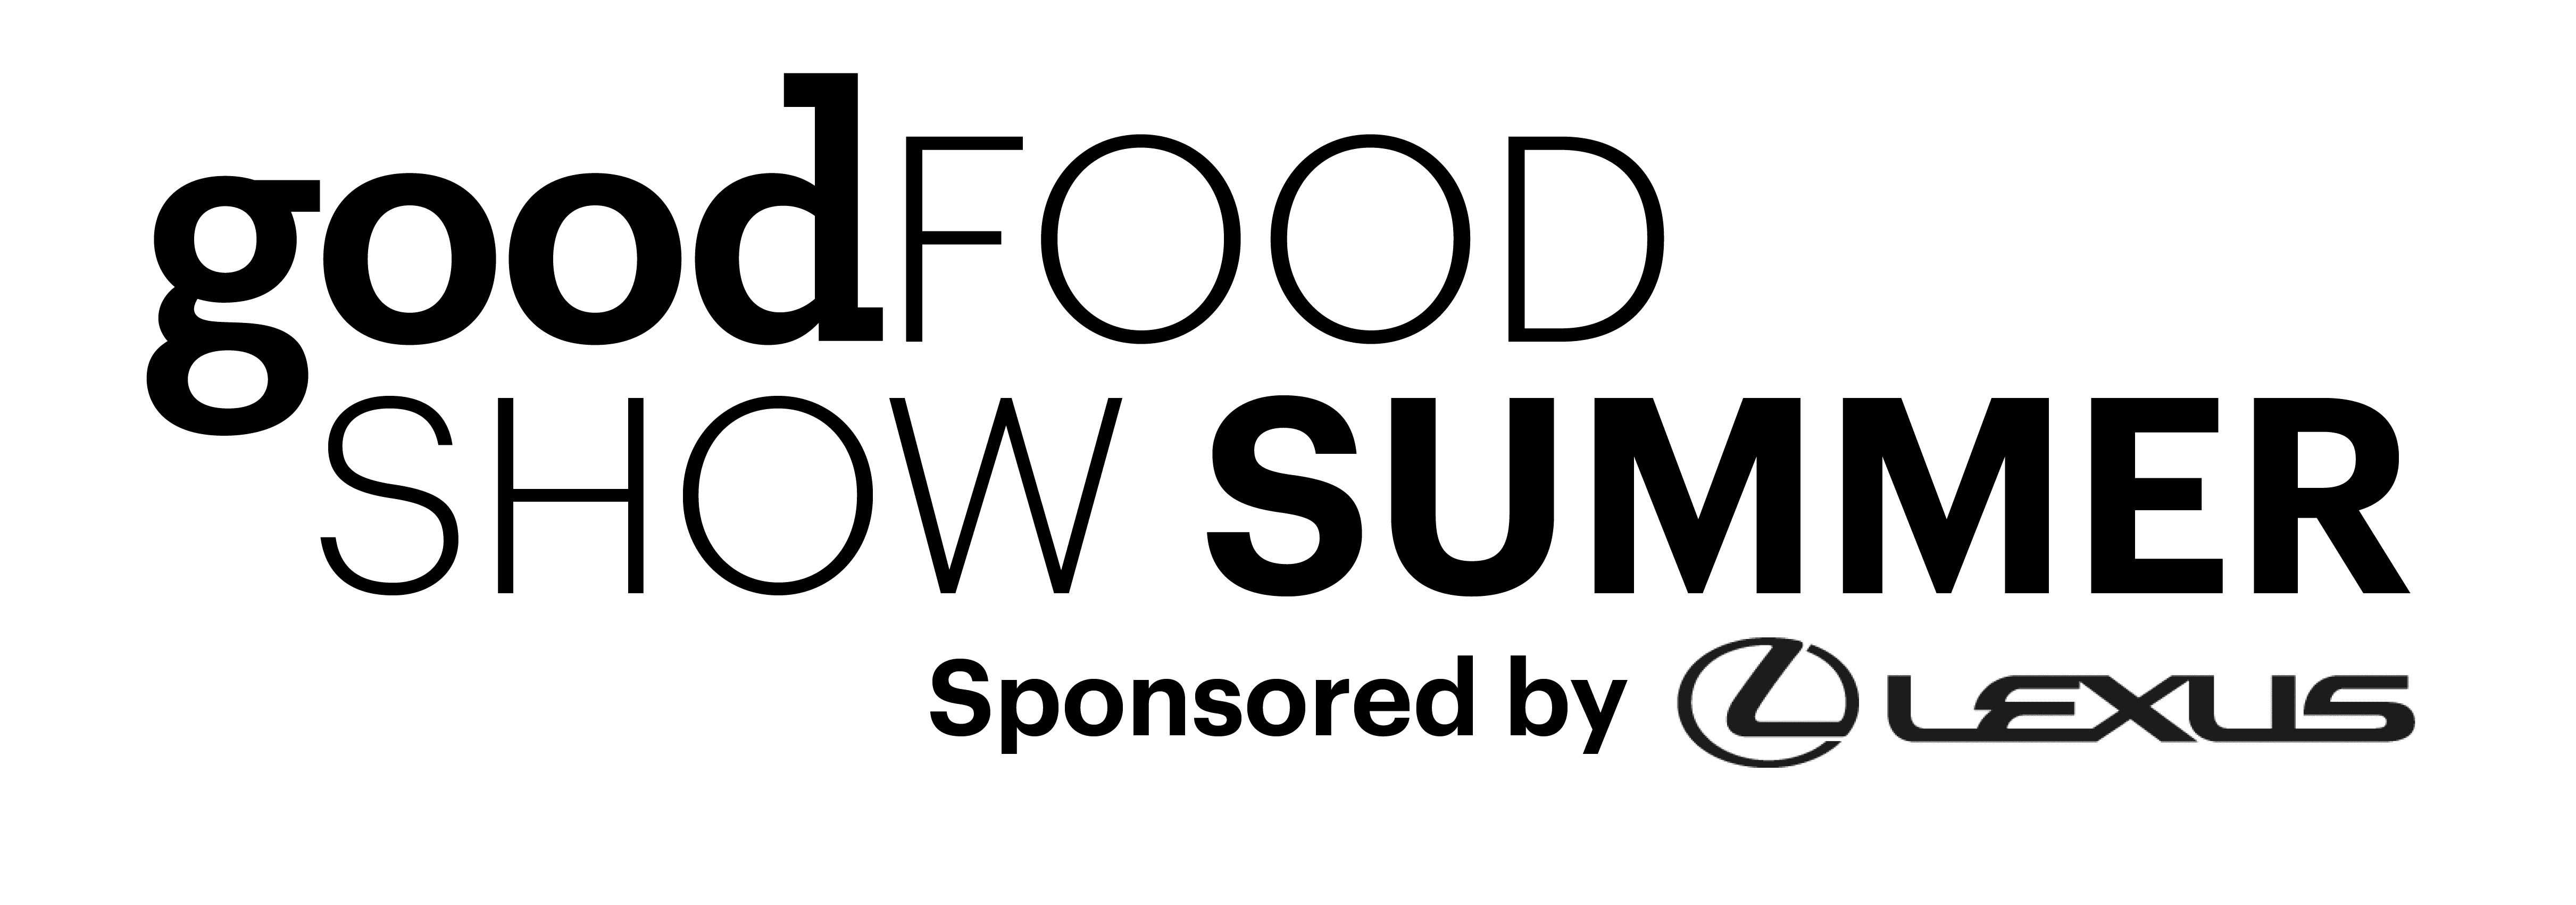 Good Food Show Summer logo